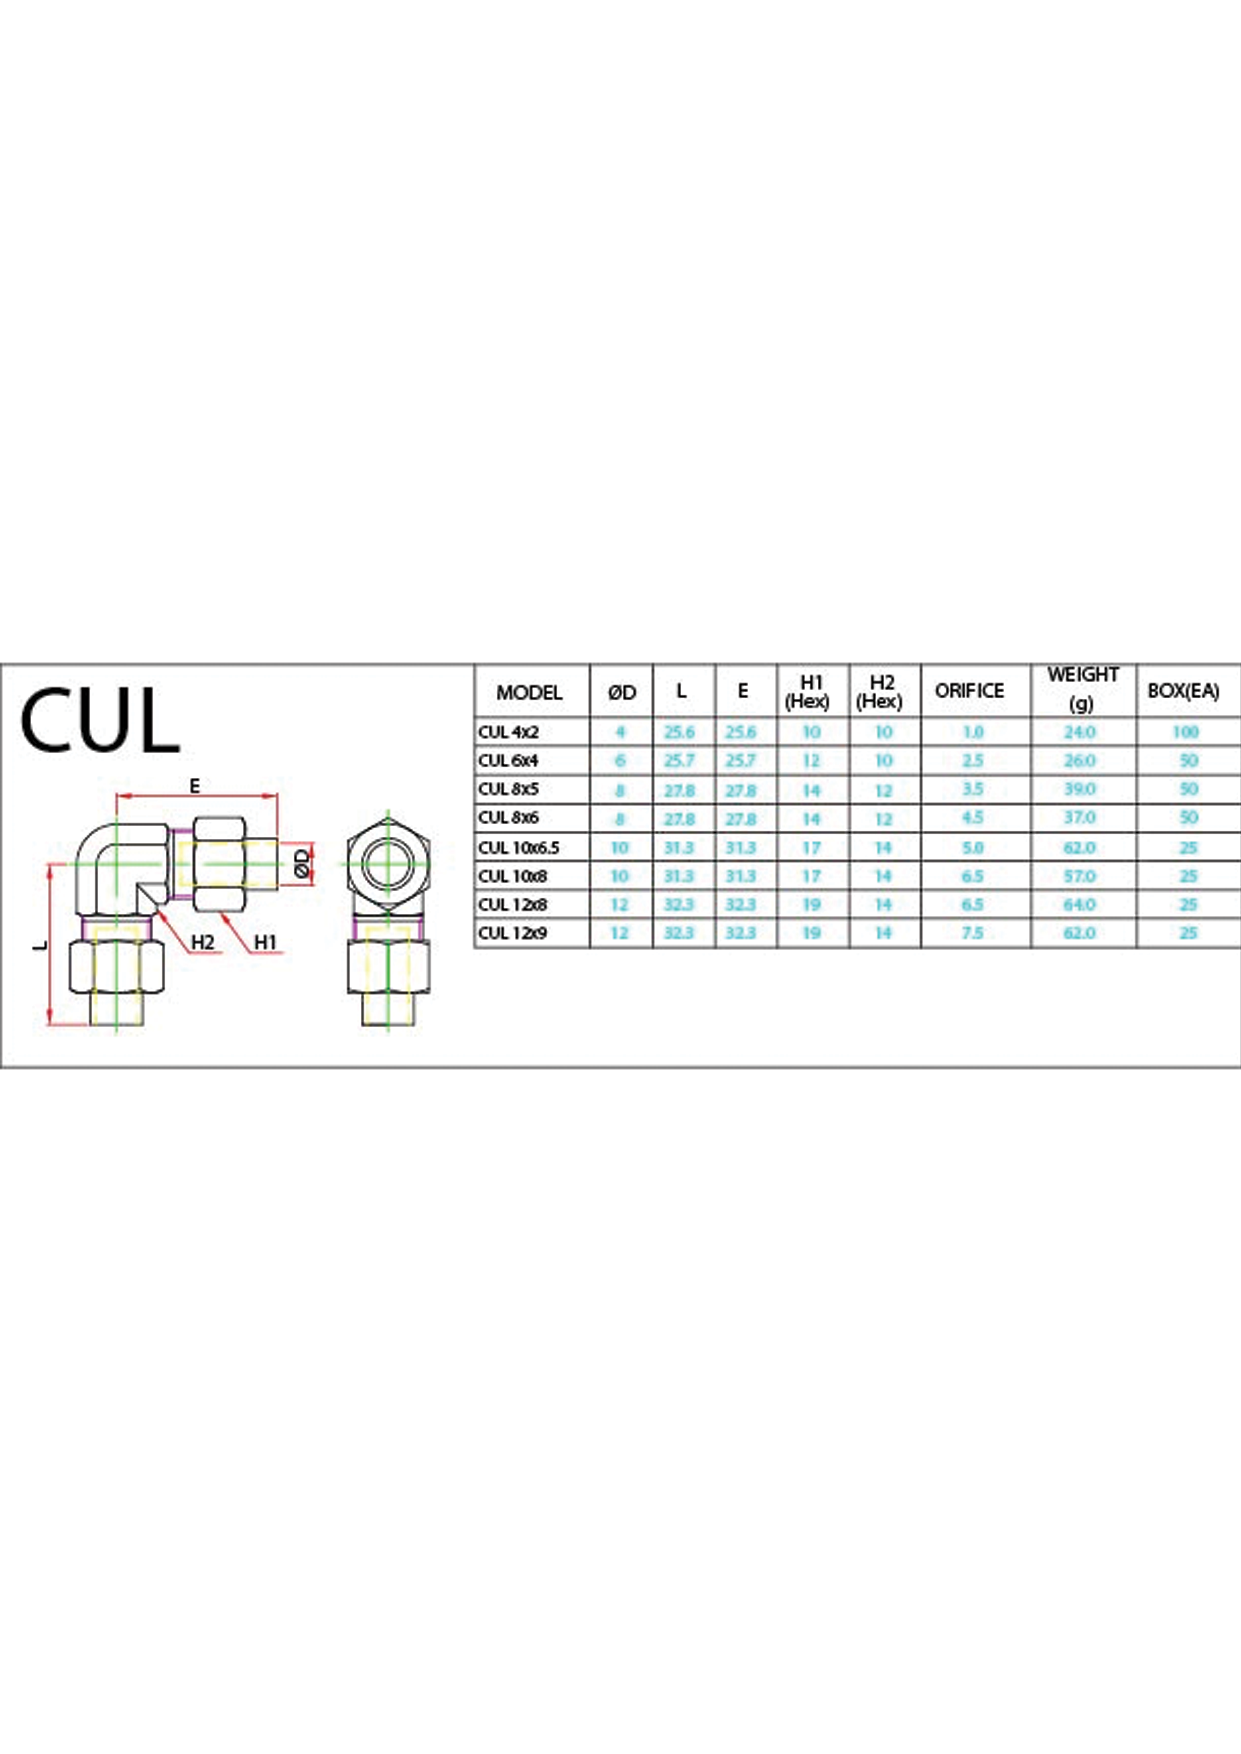 CUL (Metric) Data Sheet